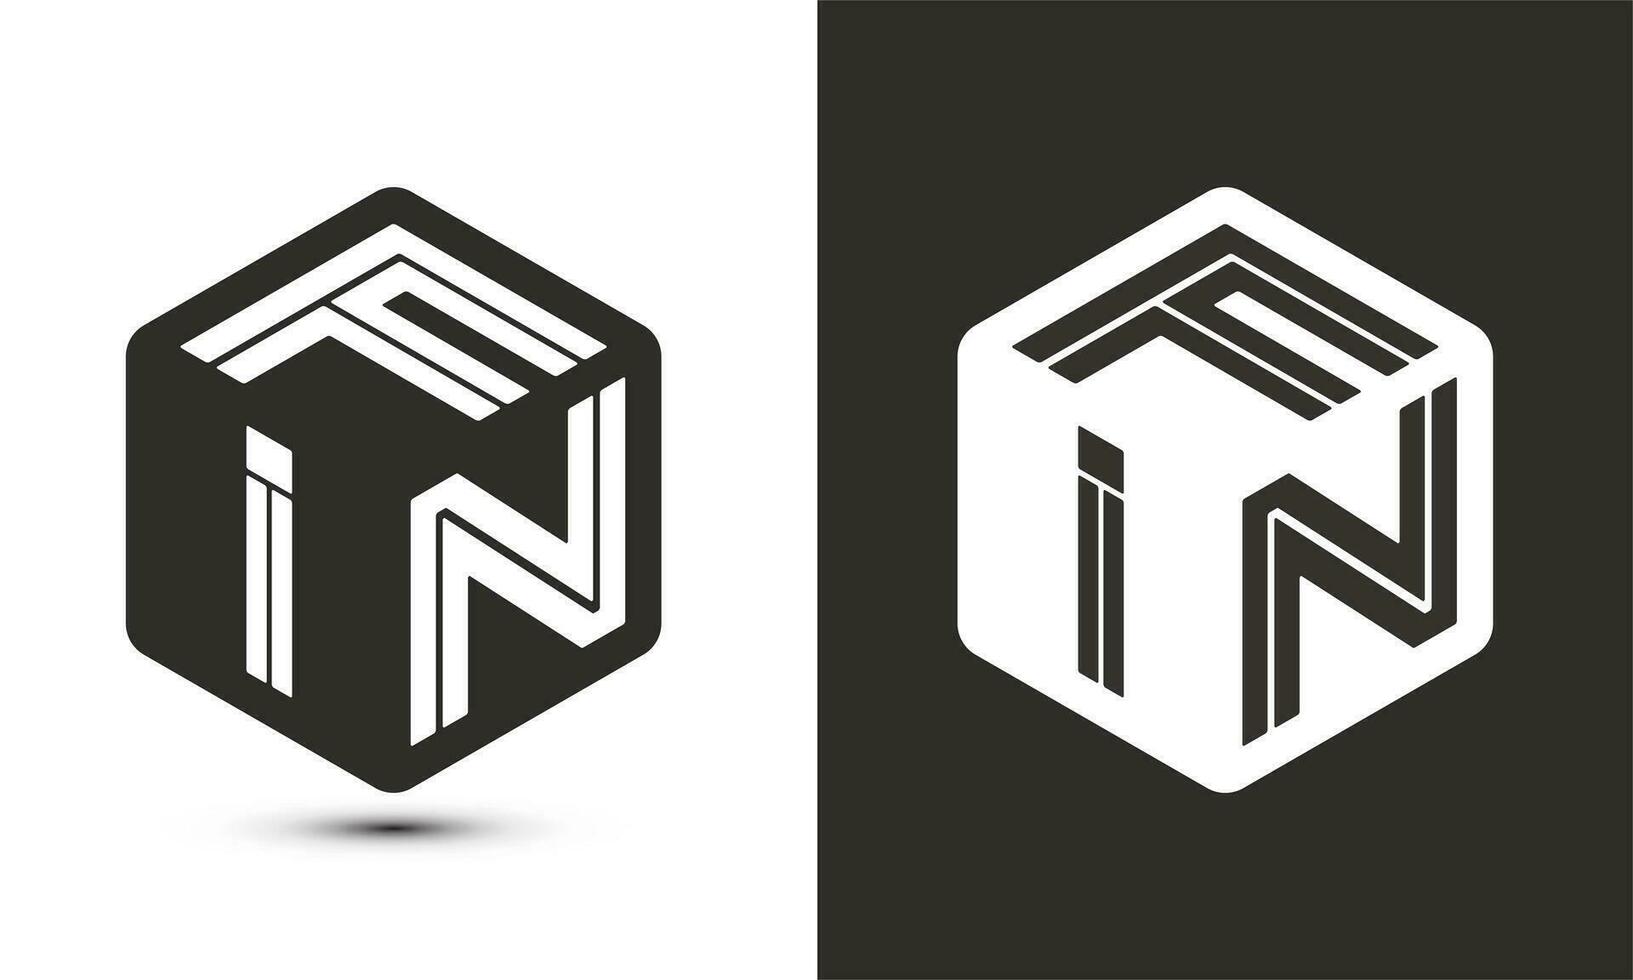 aleta letra logo diseño con ilustrador cubo logo, vector logo moderno alfabeto fuente superposición estilo.